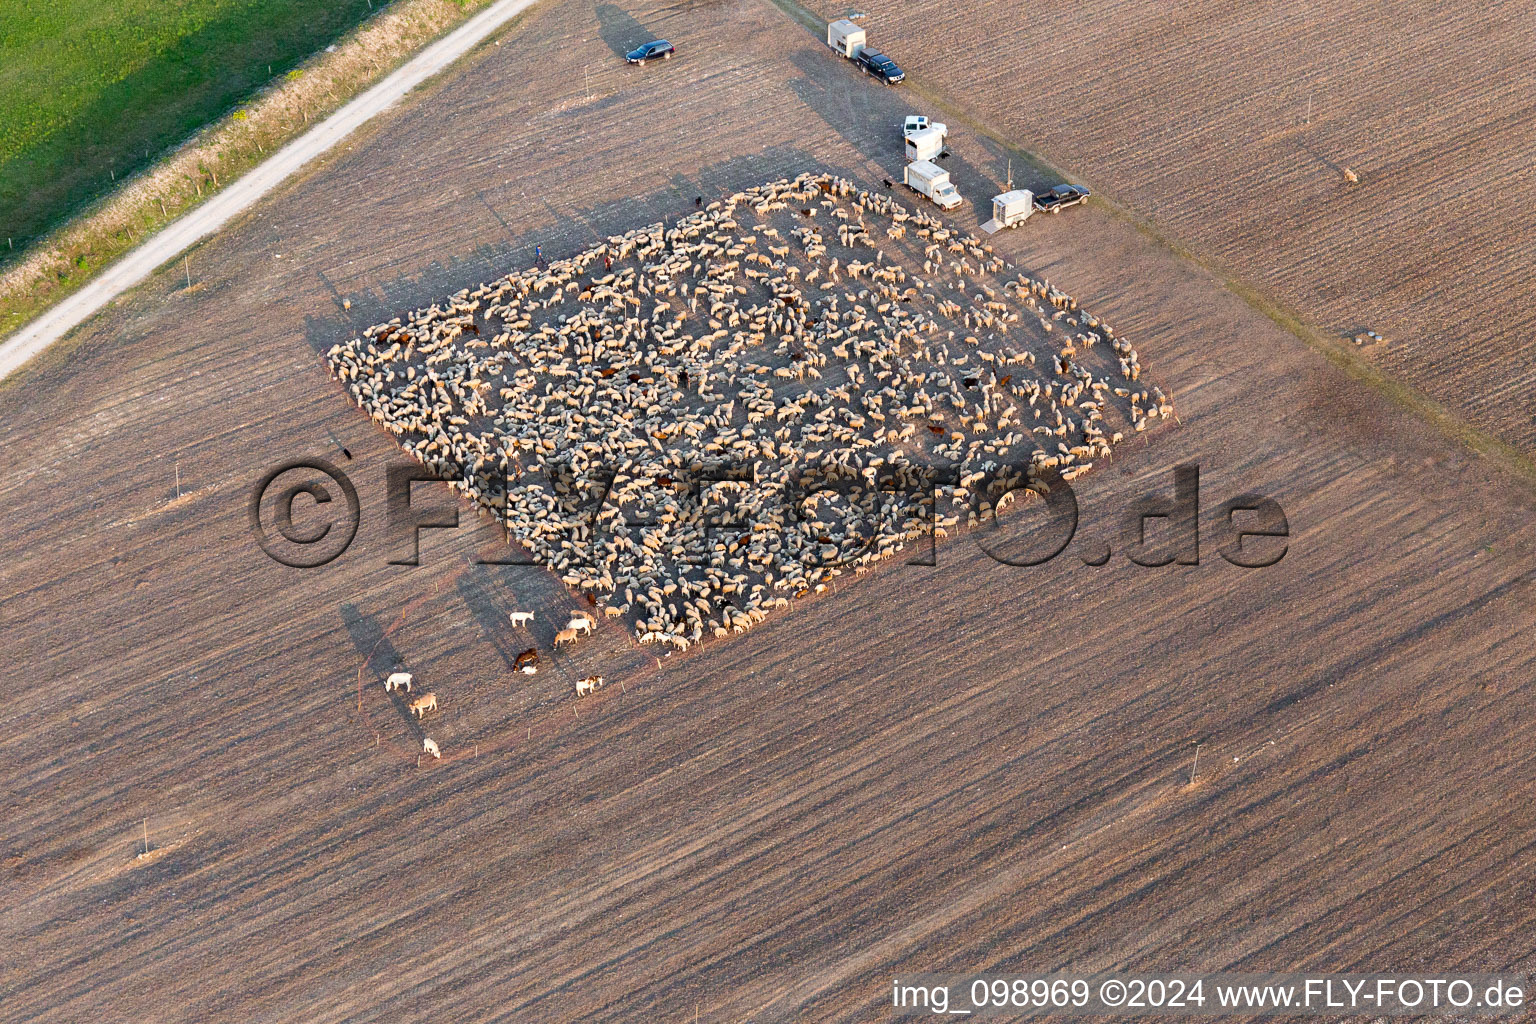 Structures with Sheep - herd in San Leonardo in Friuli-Venezia Giulia, Italy